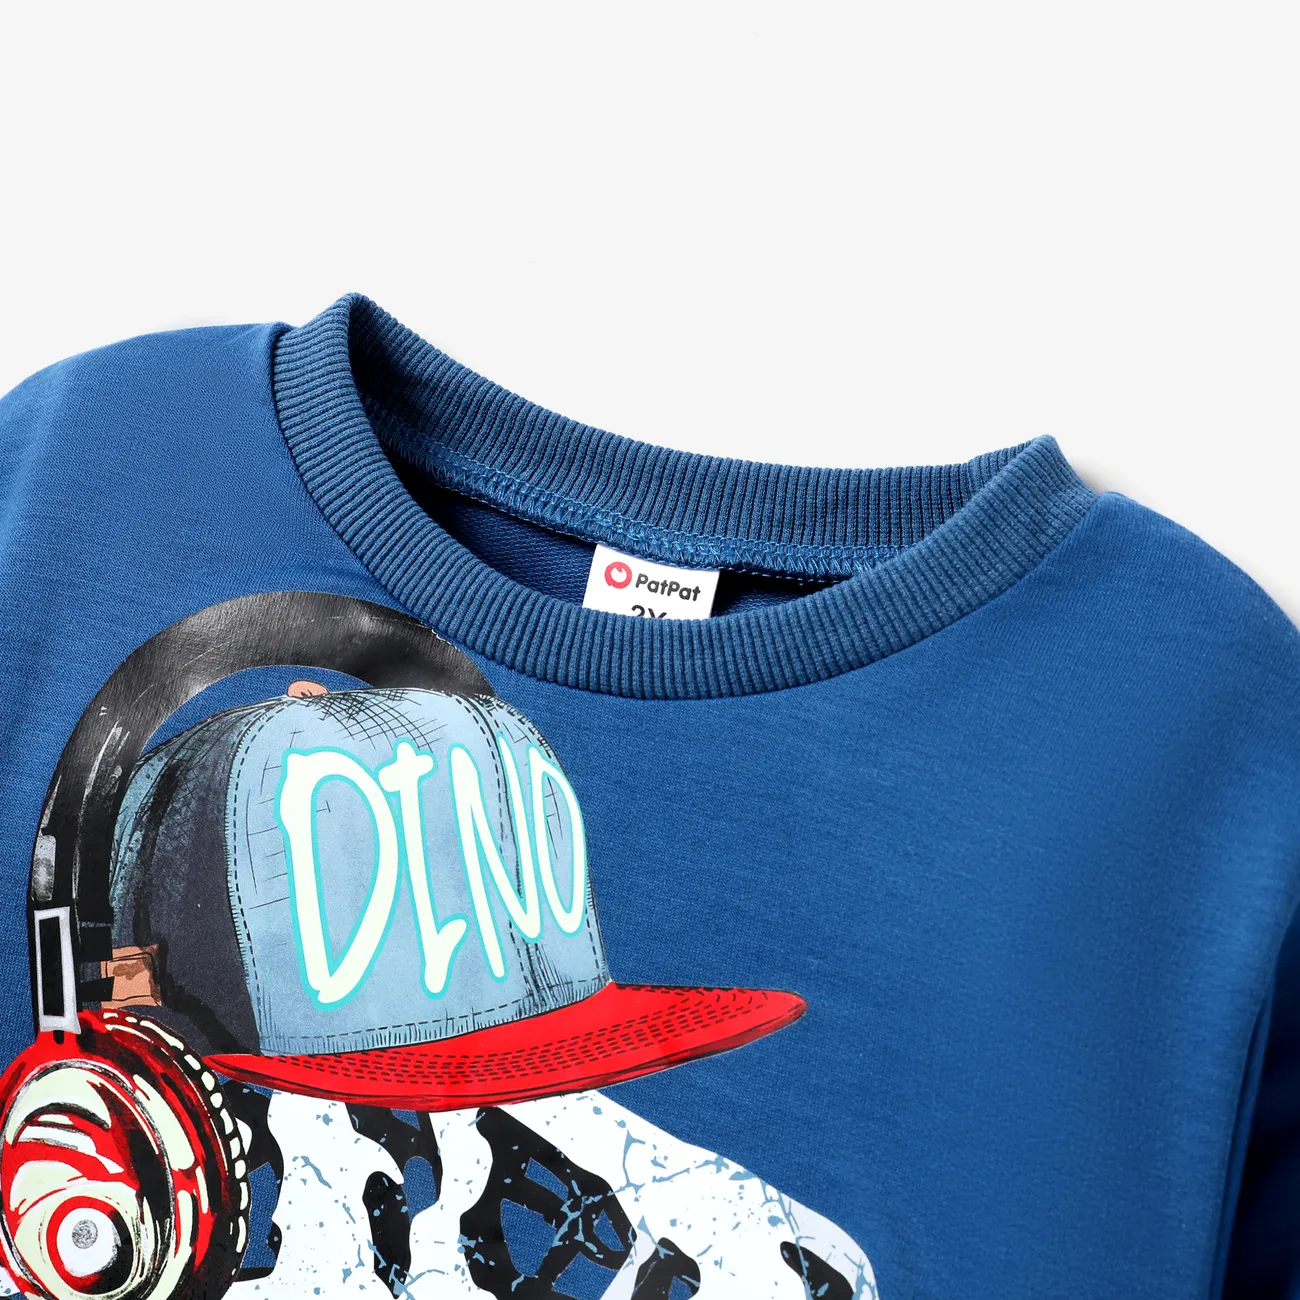 Toddler Boy 2pcs Dino Print Sweatshirt and Denim Ripped Jeans Set Blue big image 1